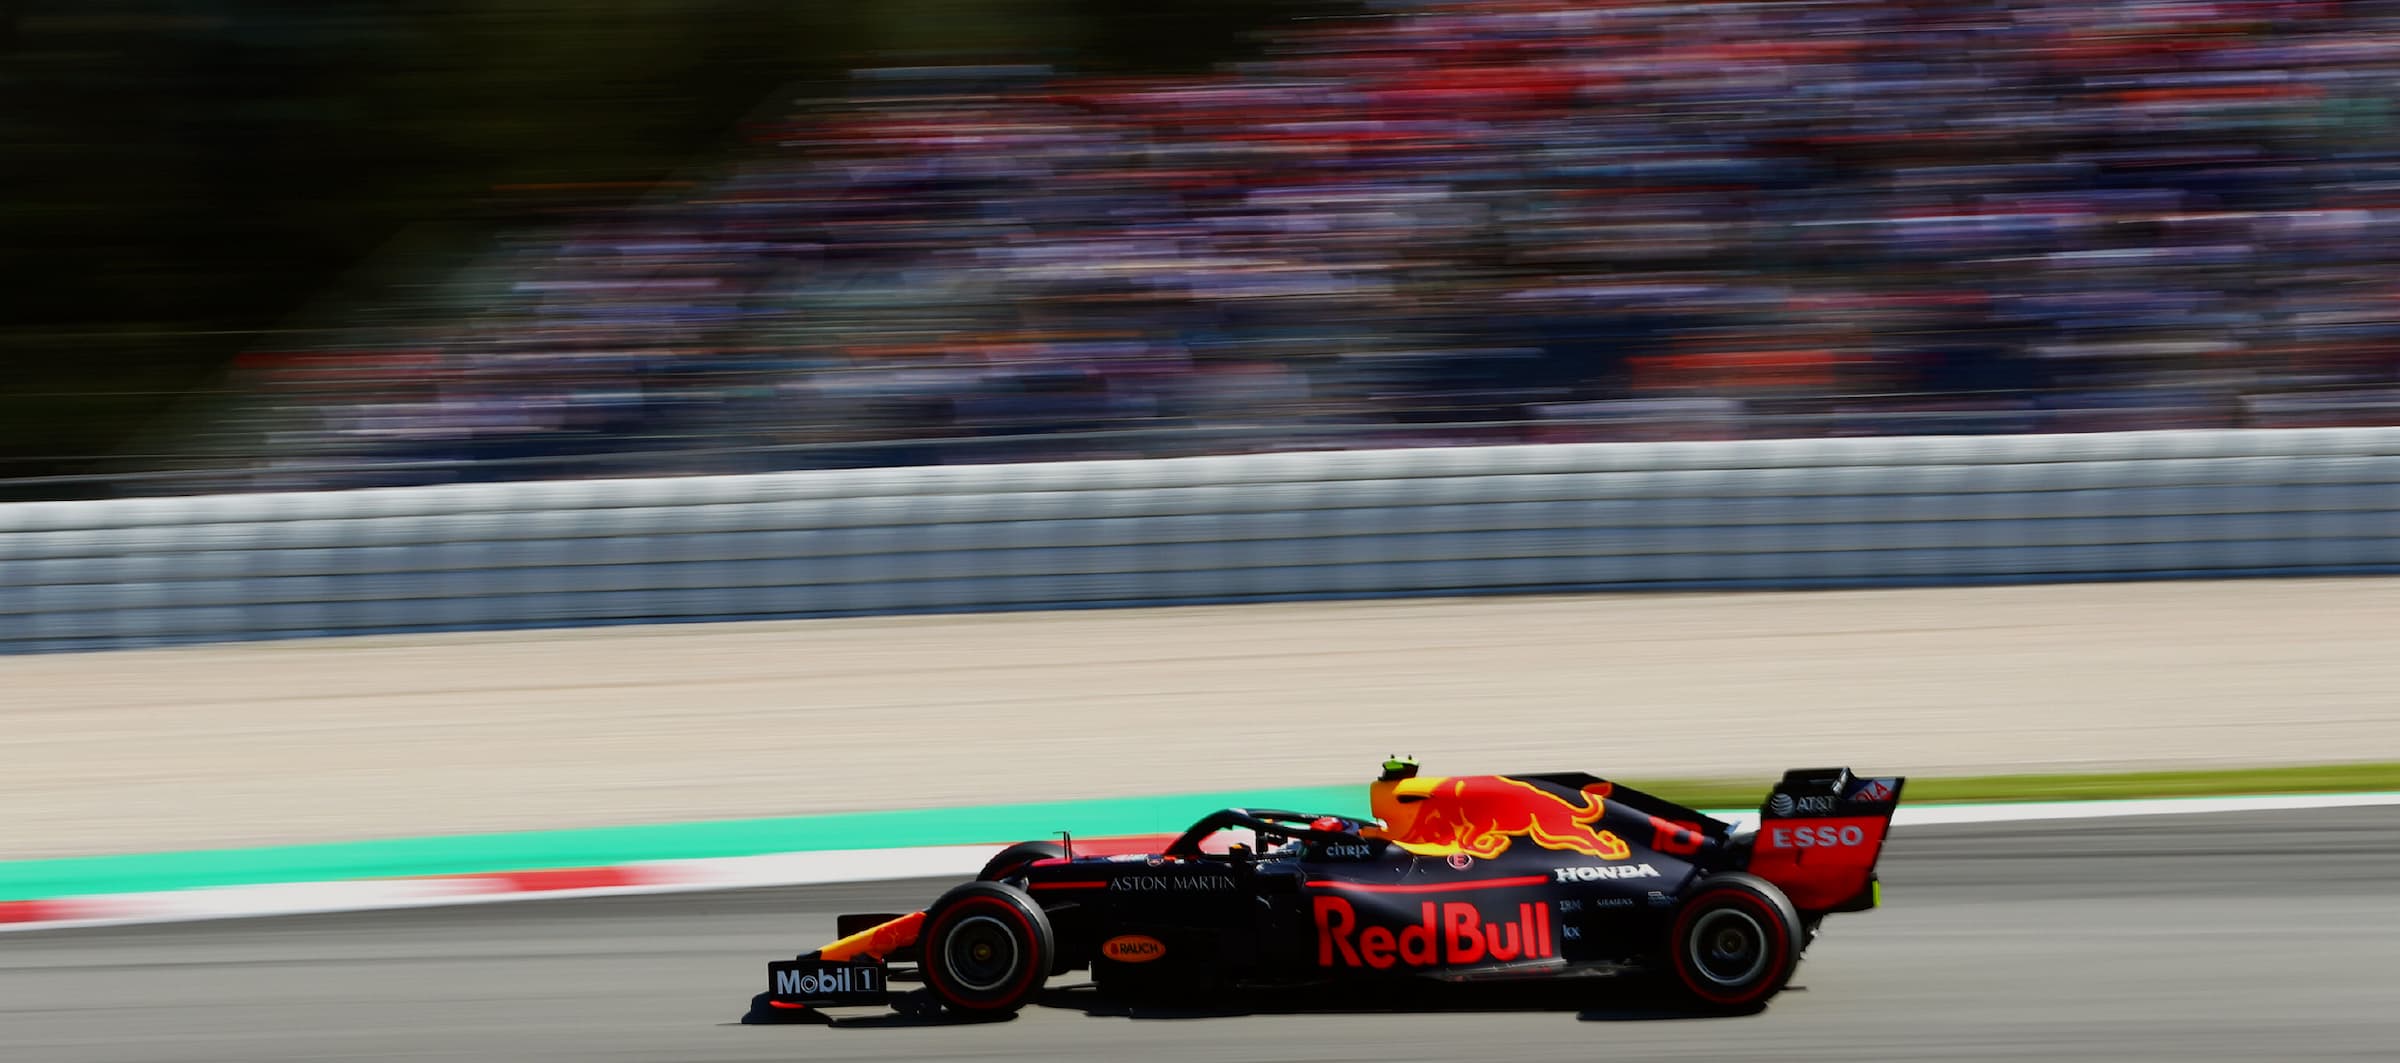 Red Bull Formula One car on track